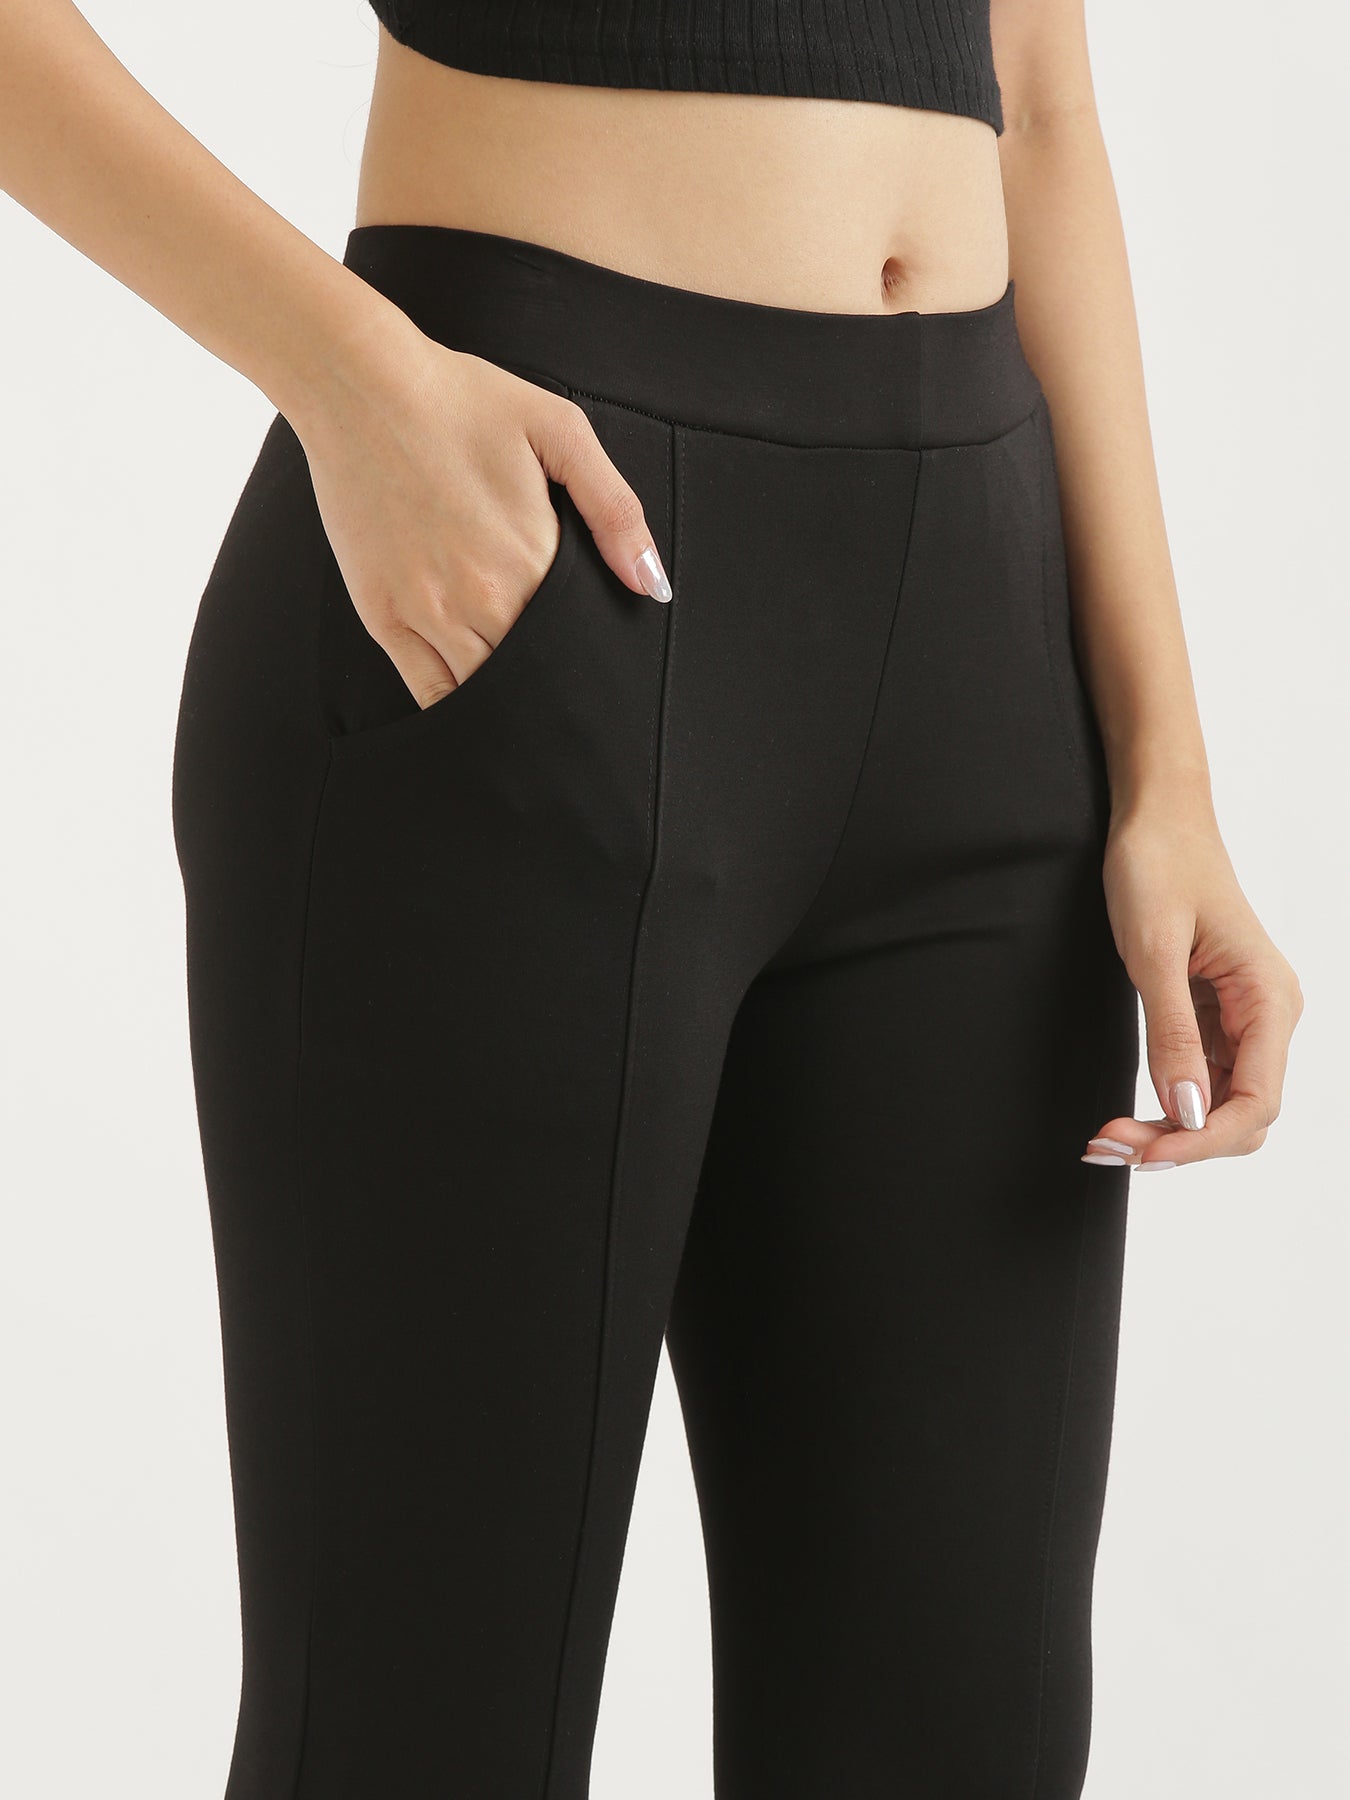 Buy Women's Ebony Black Stretch Pants Online In India